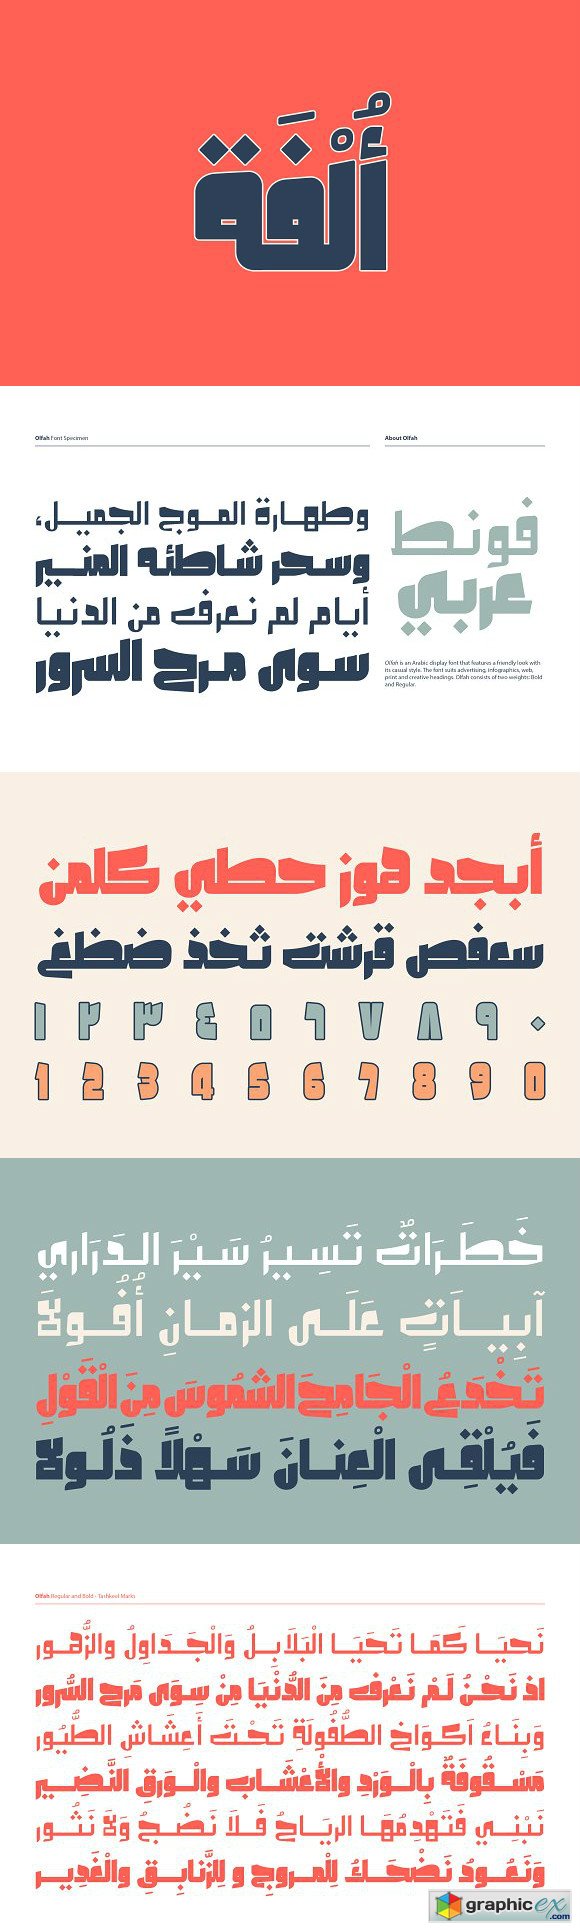 Olfah - Arabic Typeface